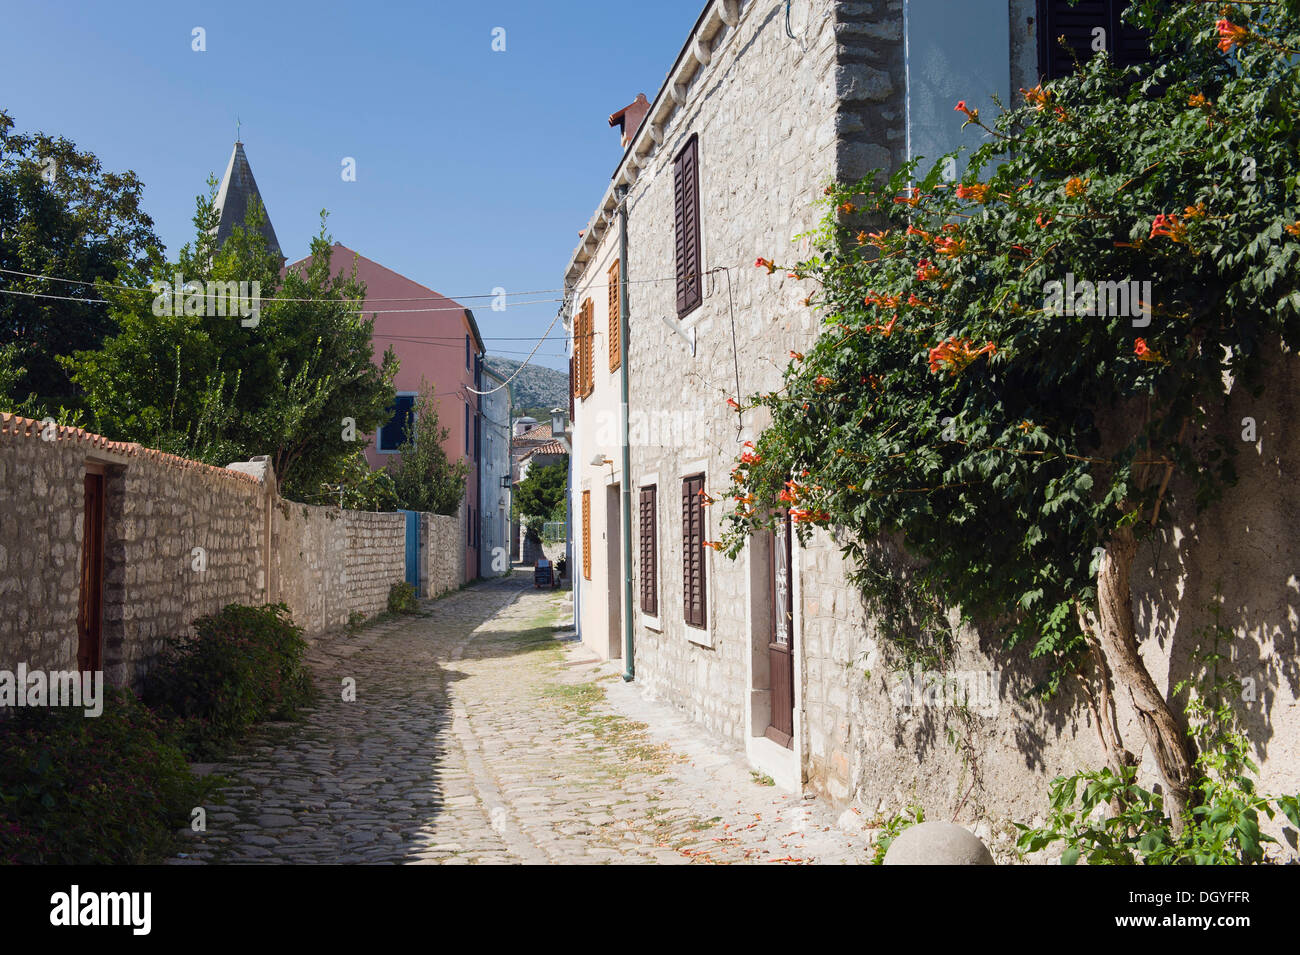 Old stone houses in Osor, Cres Island, Adriatic Sea, Kvarner Gulf, Croatia, Europe Stock Photo